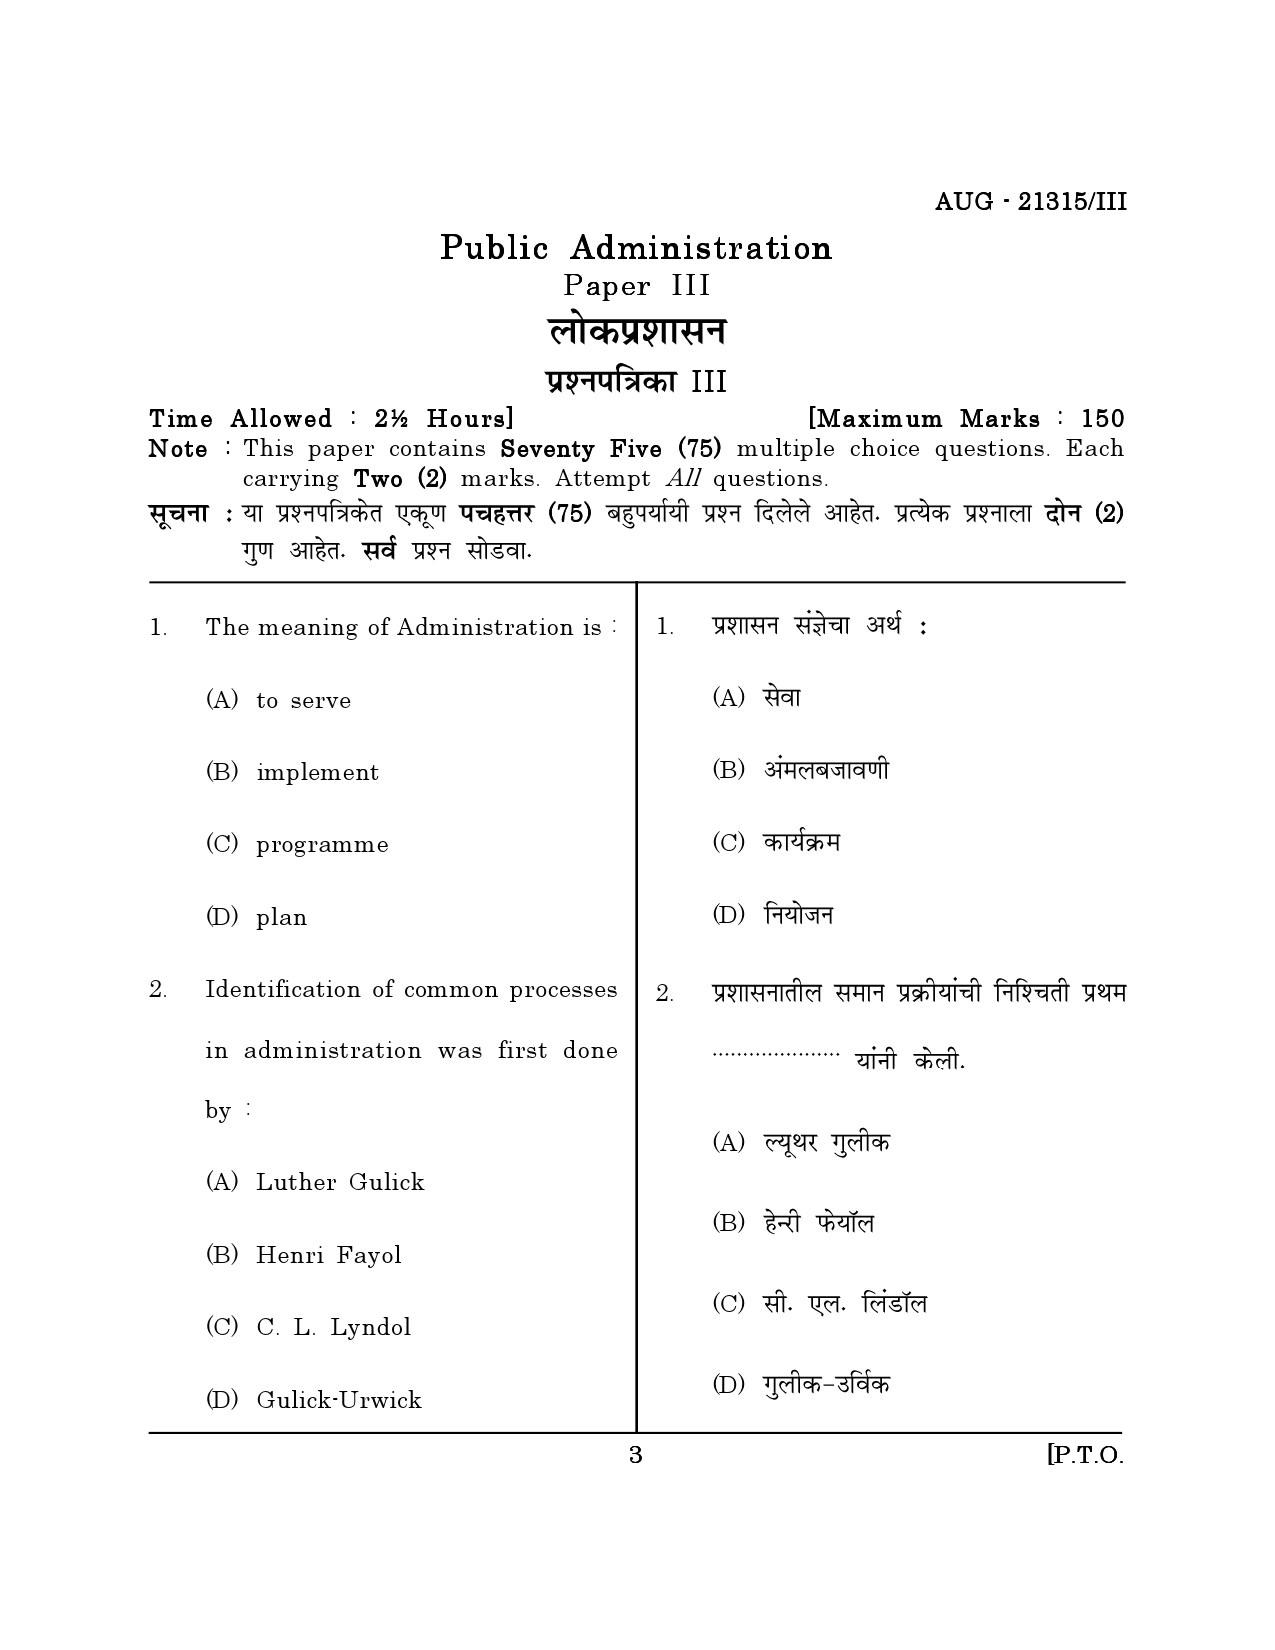 Maharashtra SET Public Administration Question Paper III August 2015 2